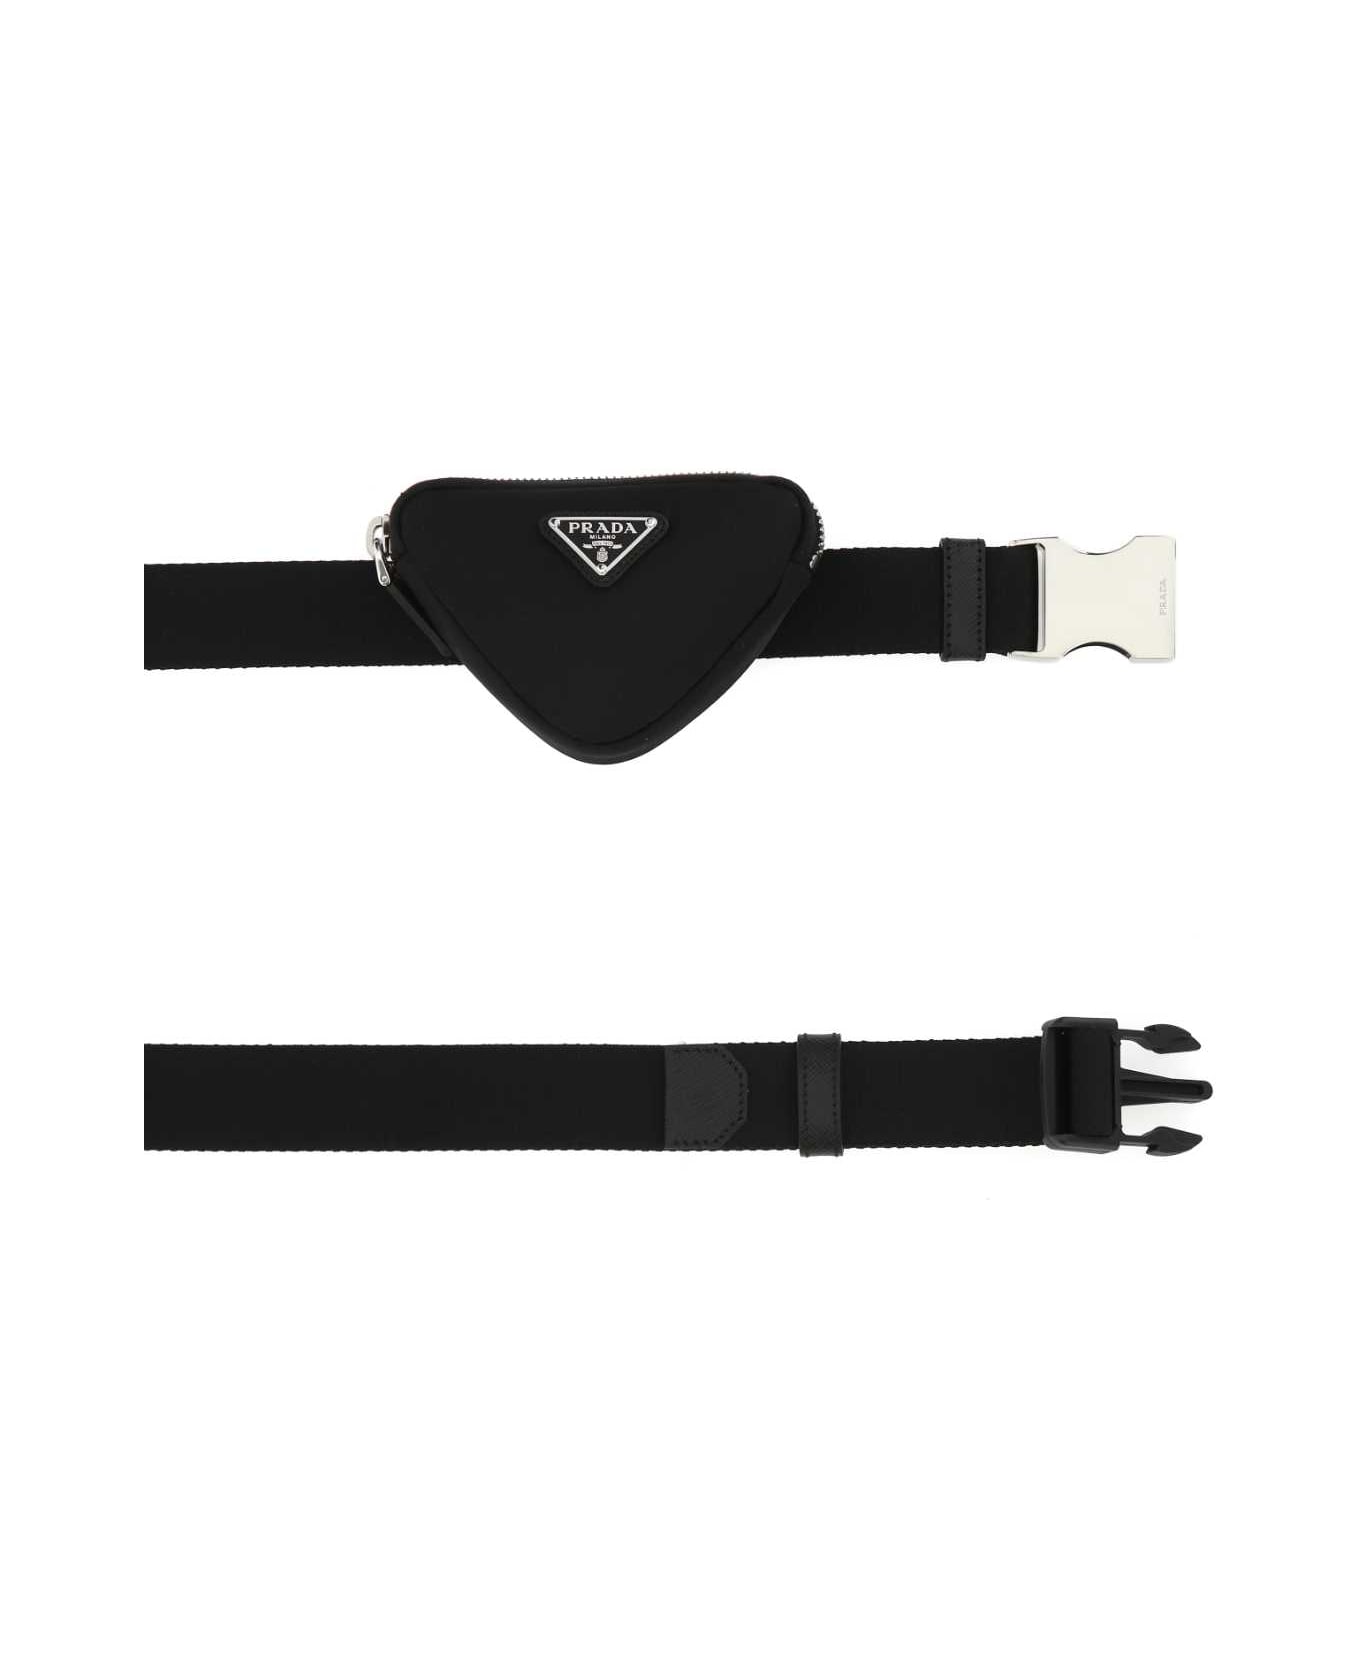 Prada Black Fabric Belt - Black